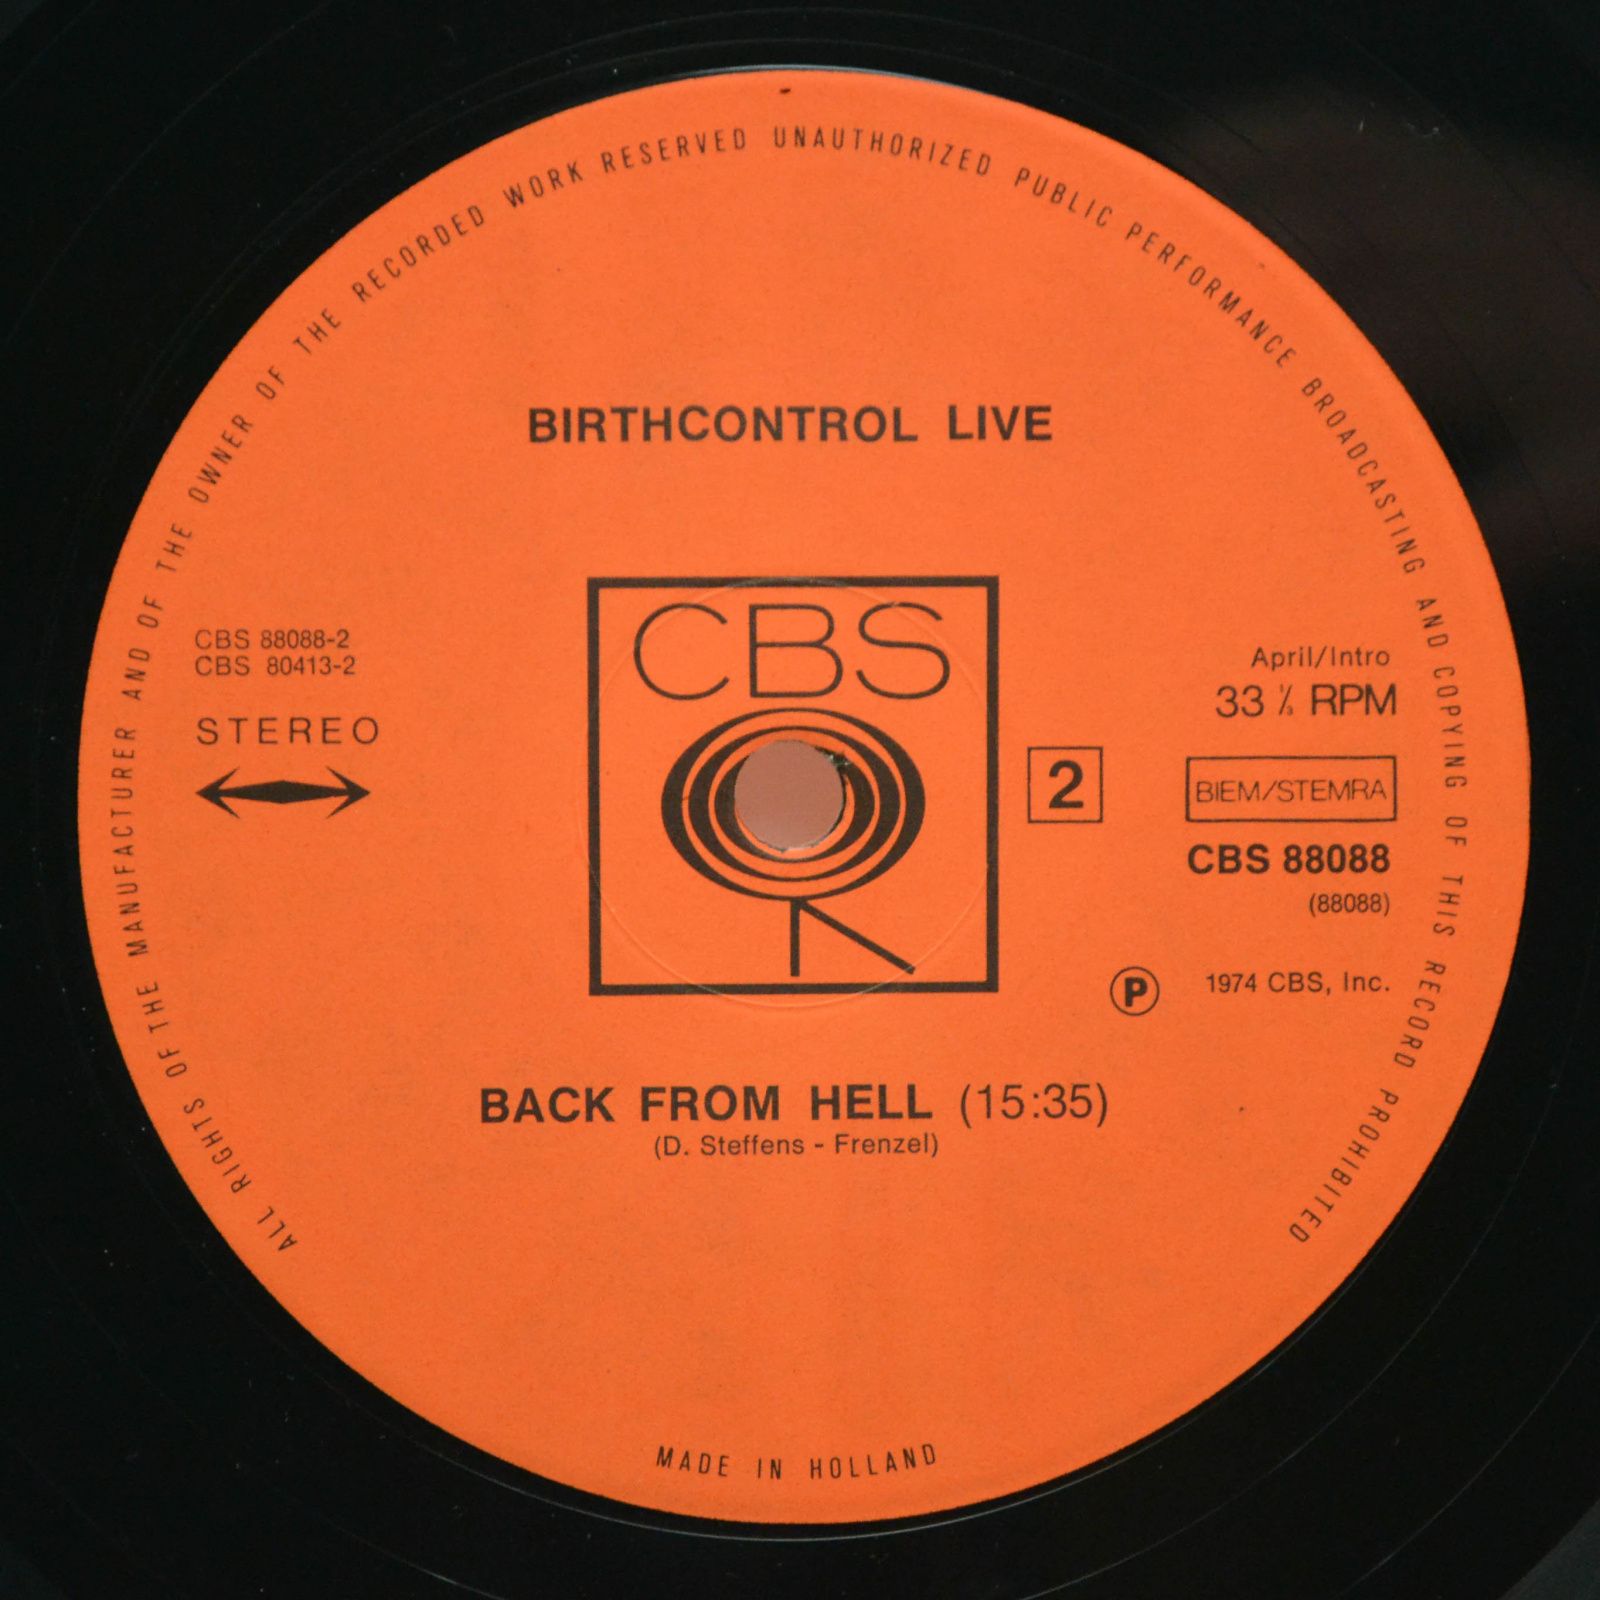 Birthcontrol — Birthcontrol Live (2LP), 1974